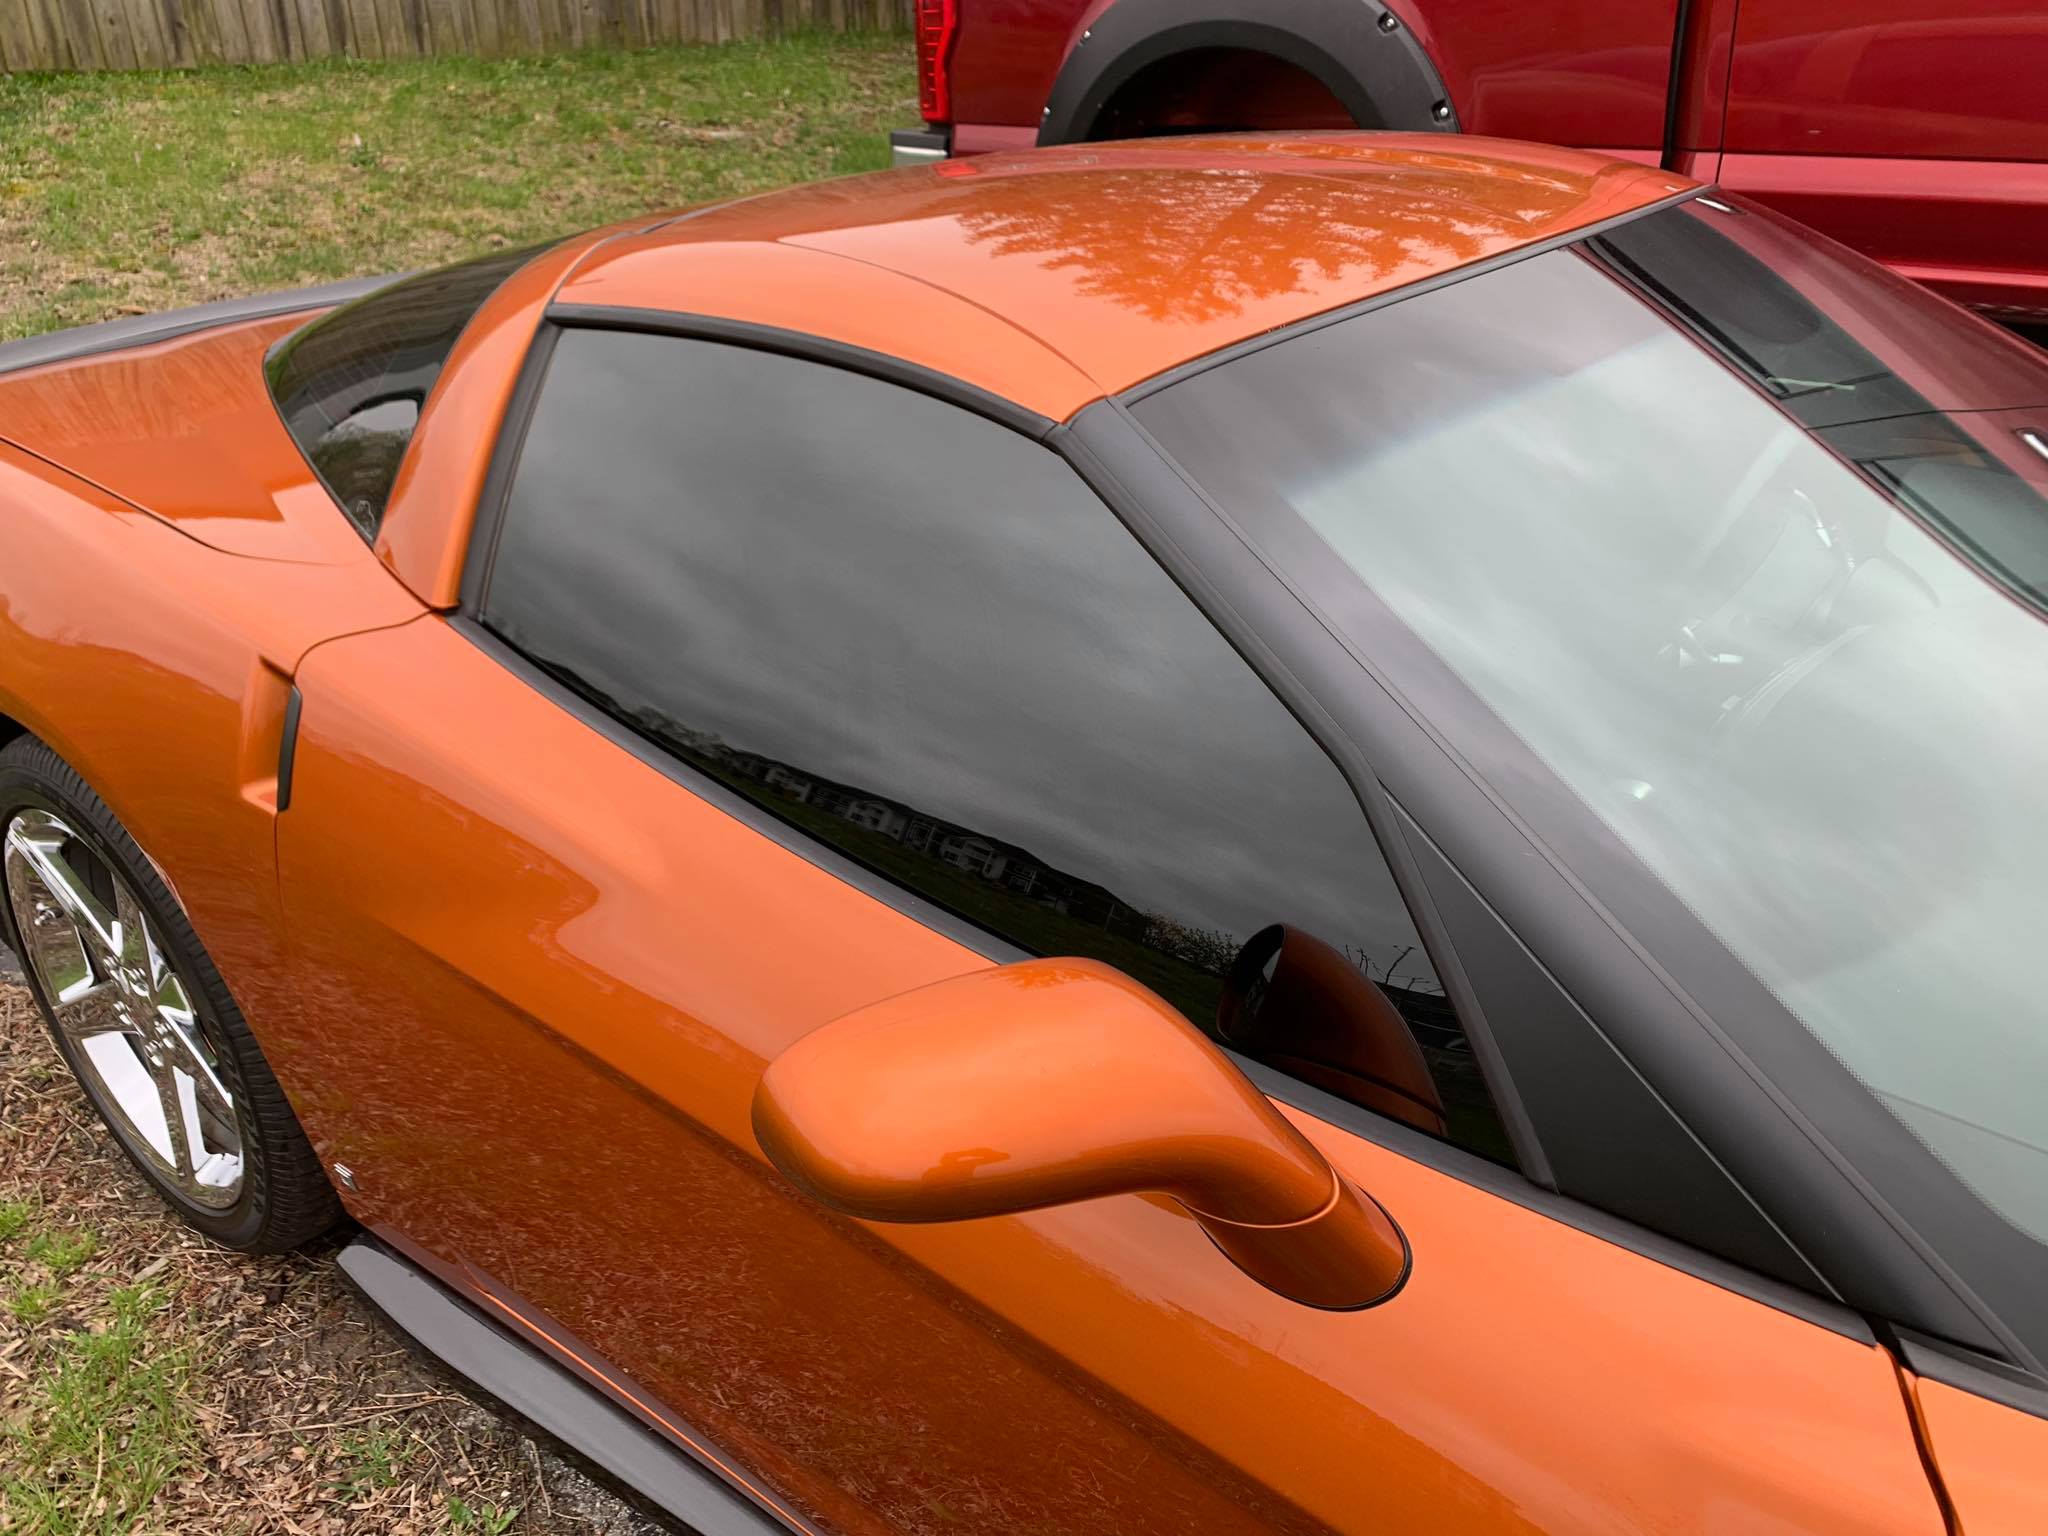 Orange sports car with window tint